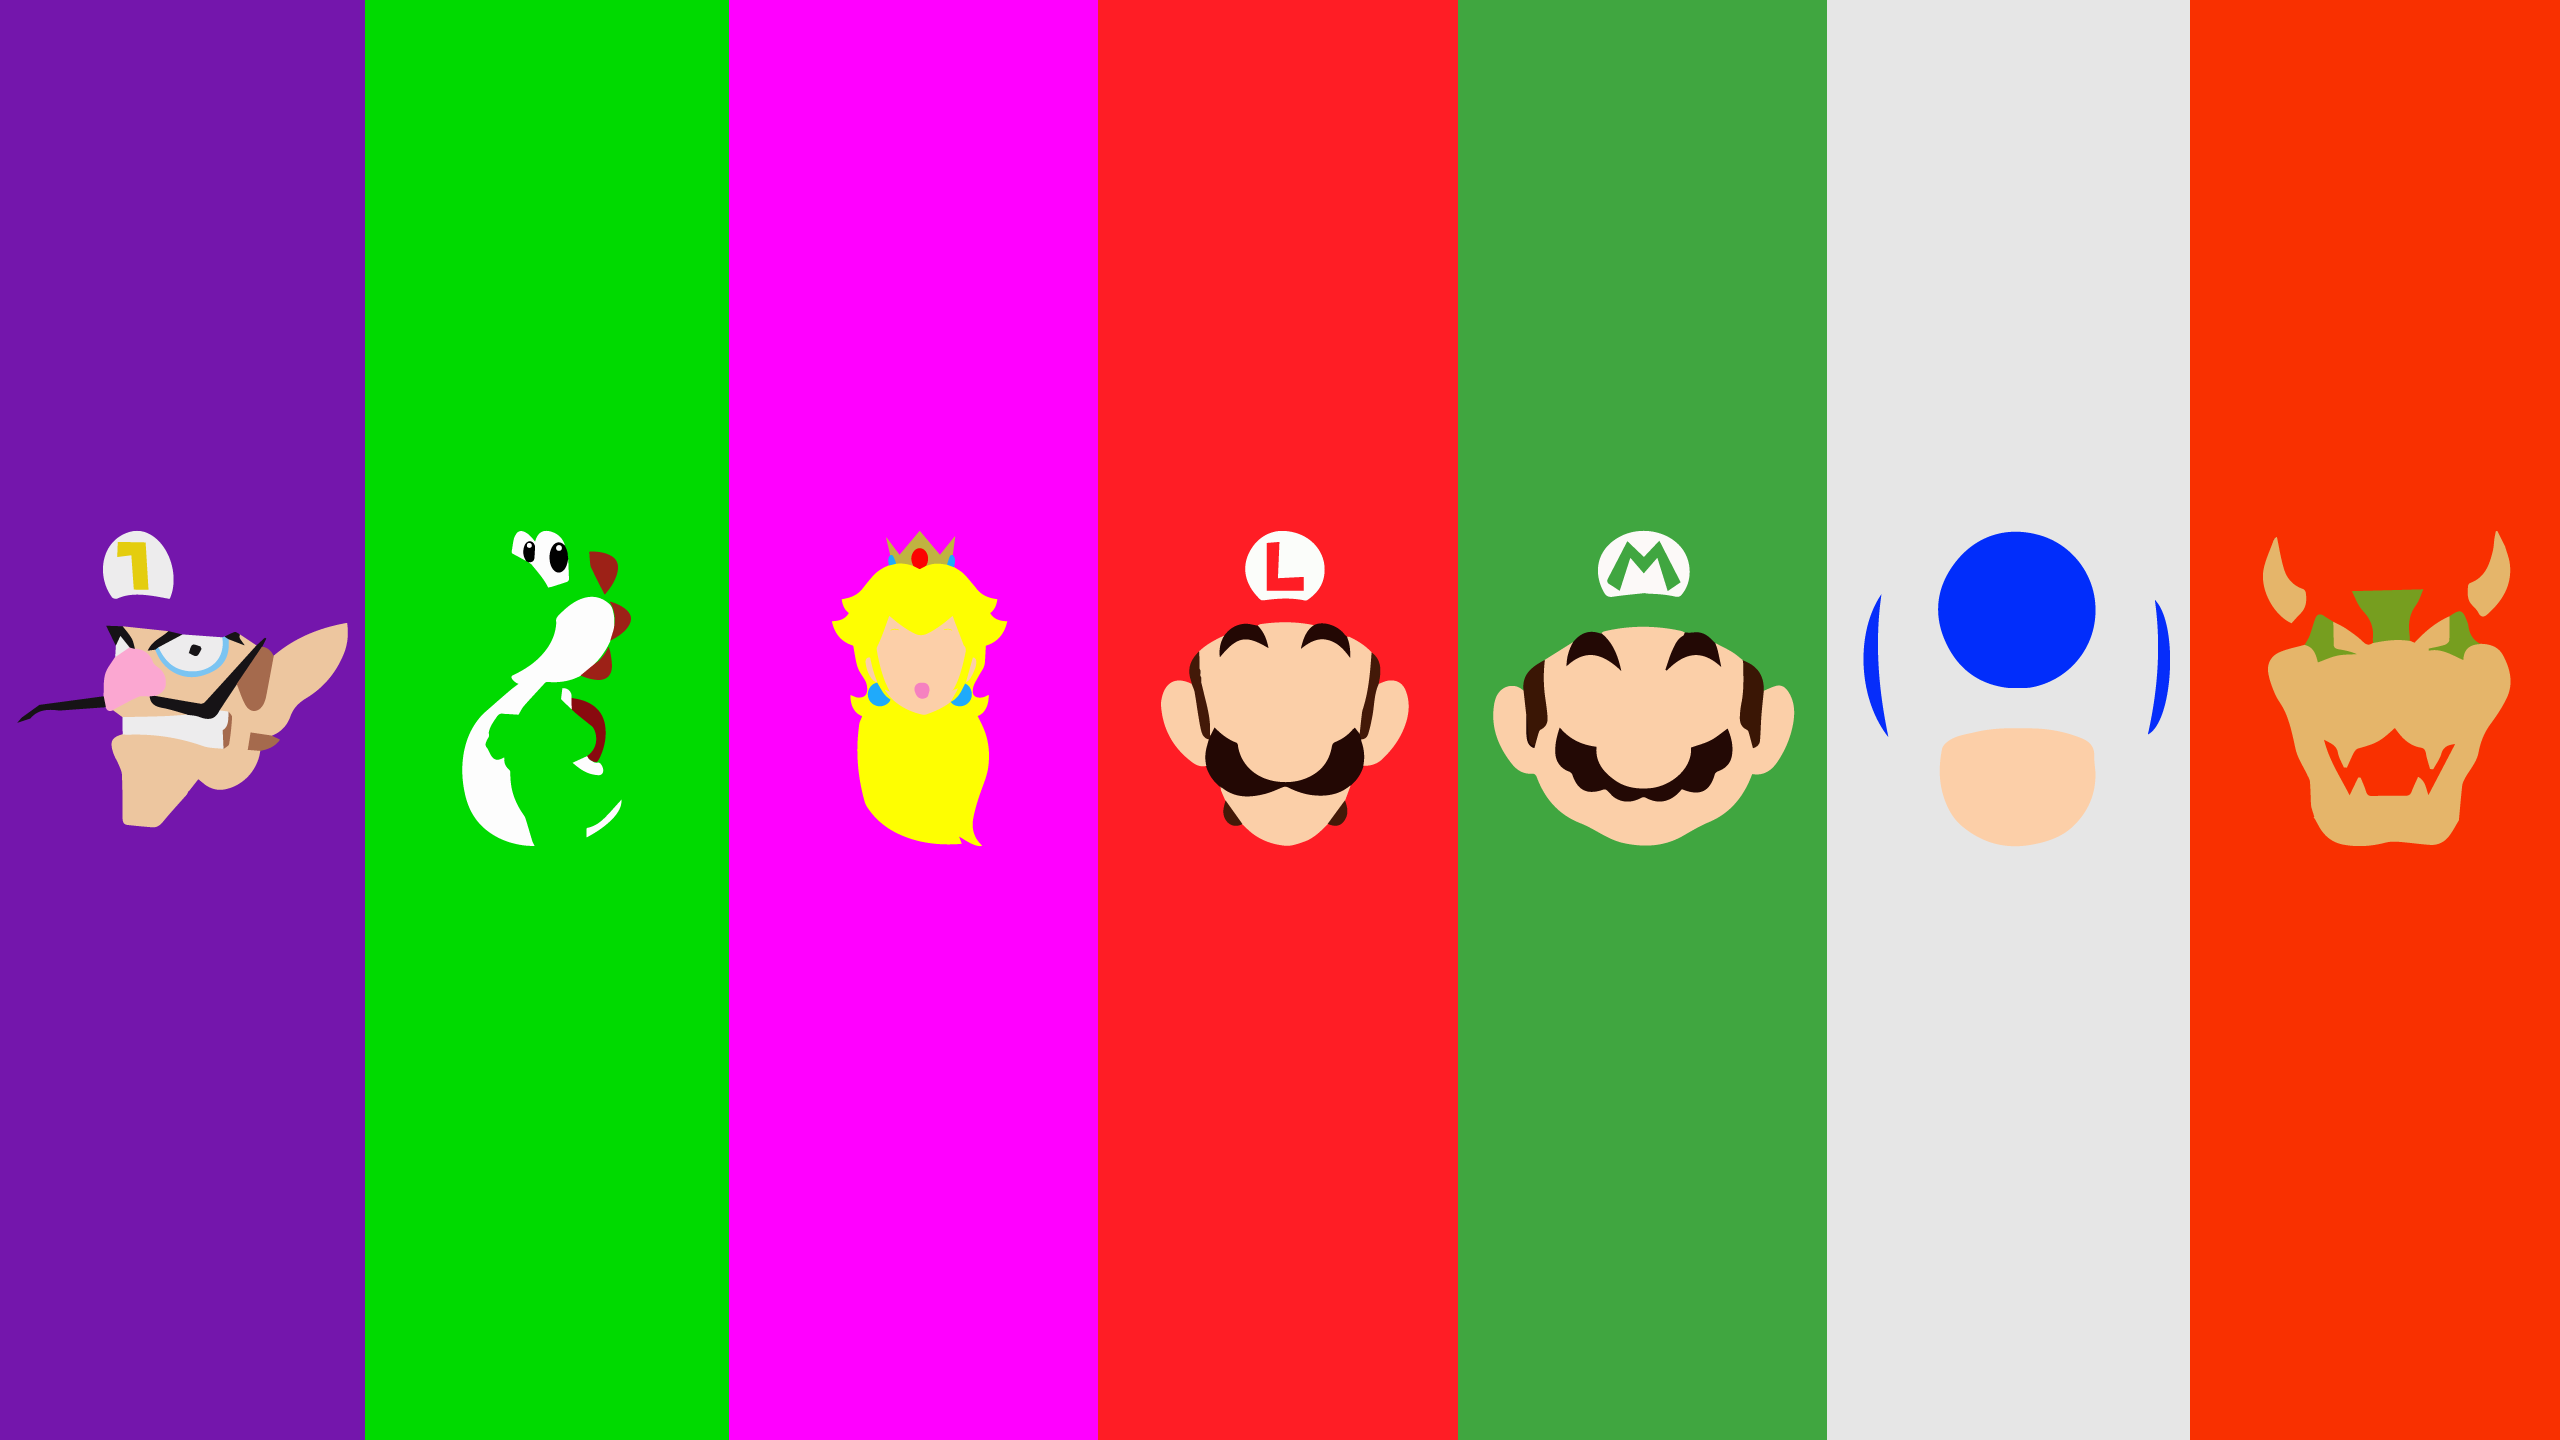 Video Game Mario Kart HD Wallpaper | Background Image